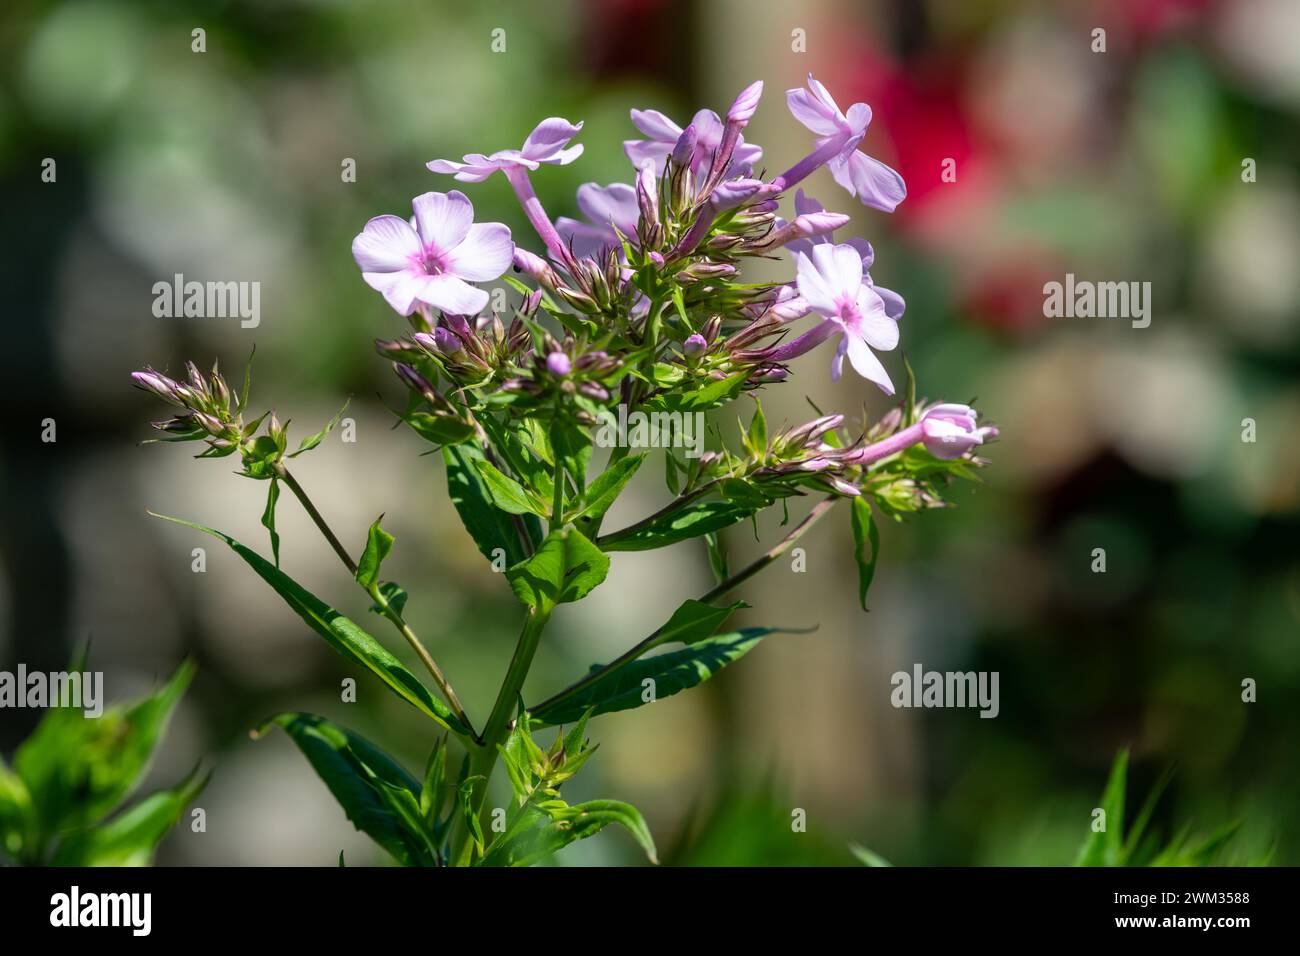 Close up of pink garden phlox (phlox paniculata) flowers in bloom Stock Photo